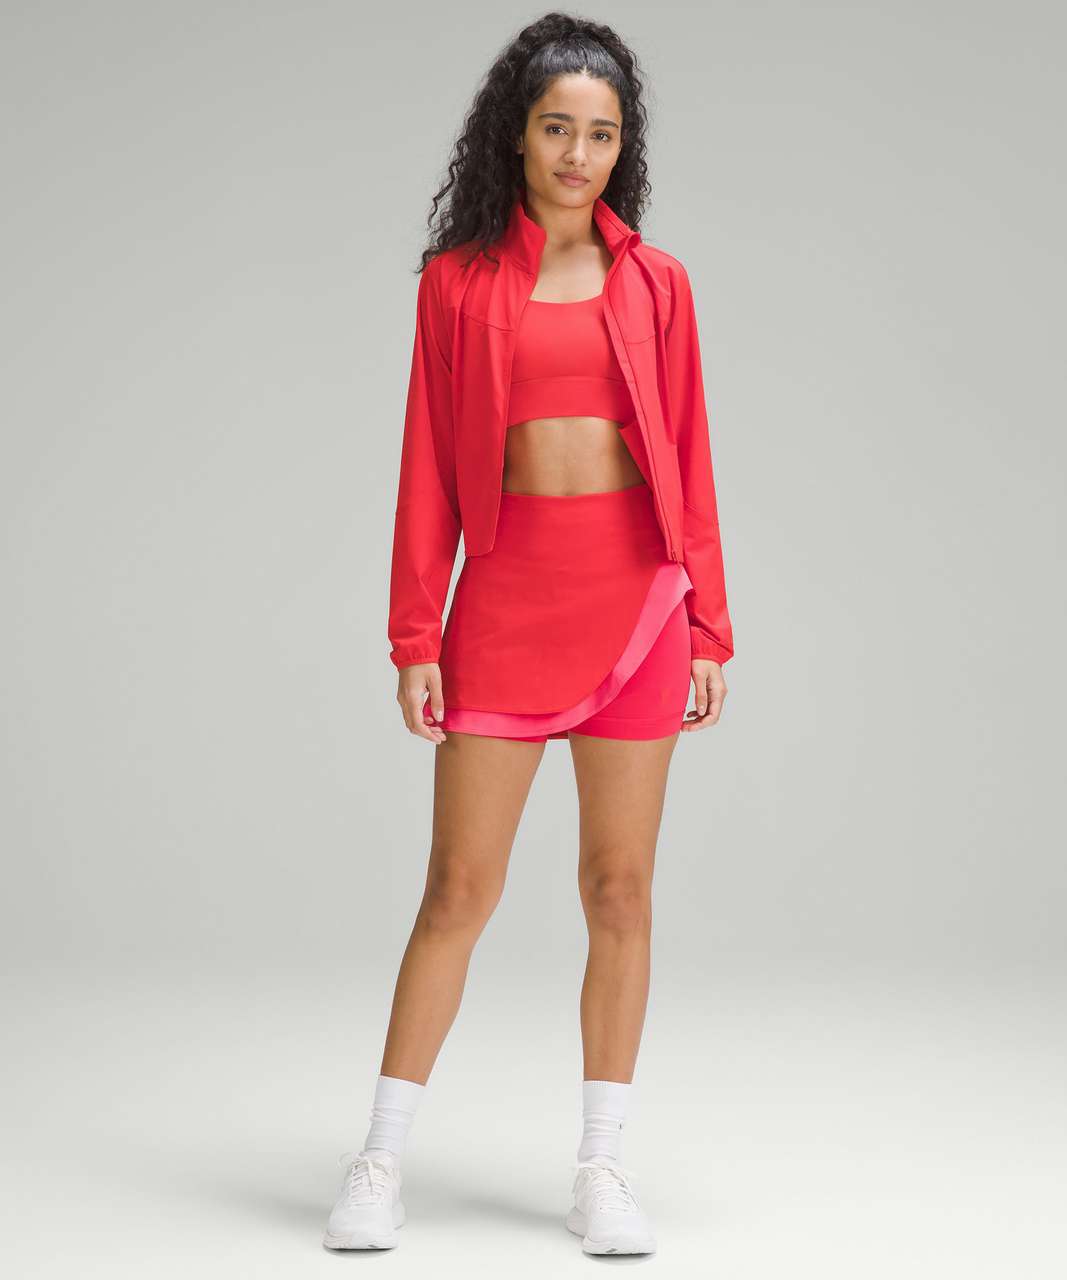 Lululemon Asymmetrical Layered High-Rise Tennis Skirt - Hot Heat / Lip Gloss / Red Glow